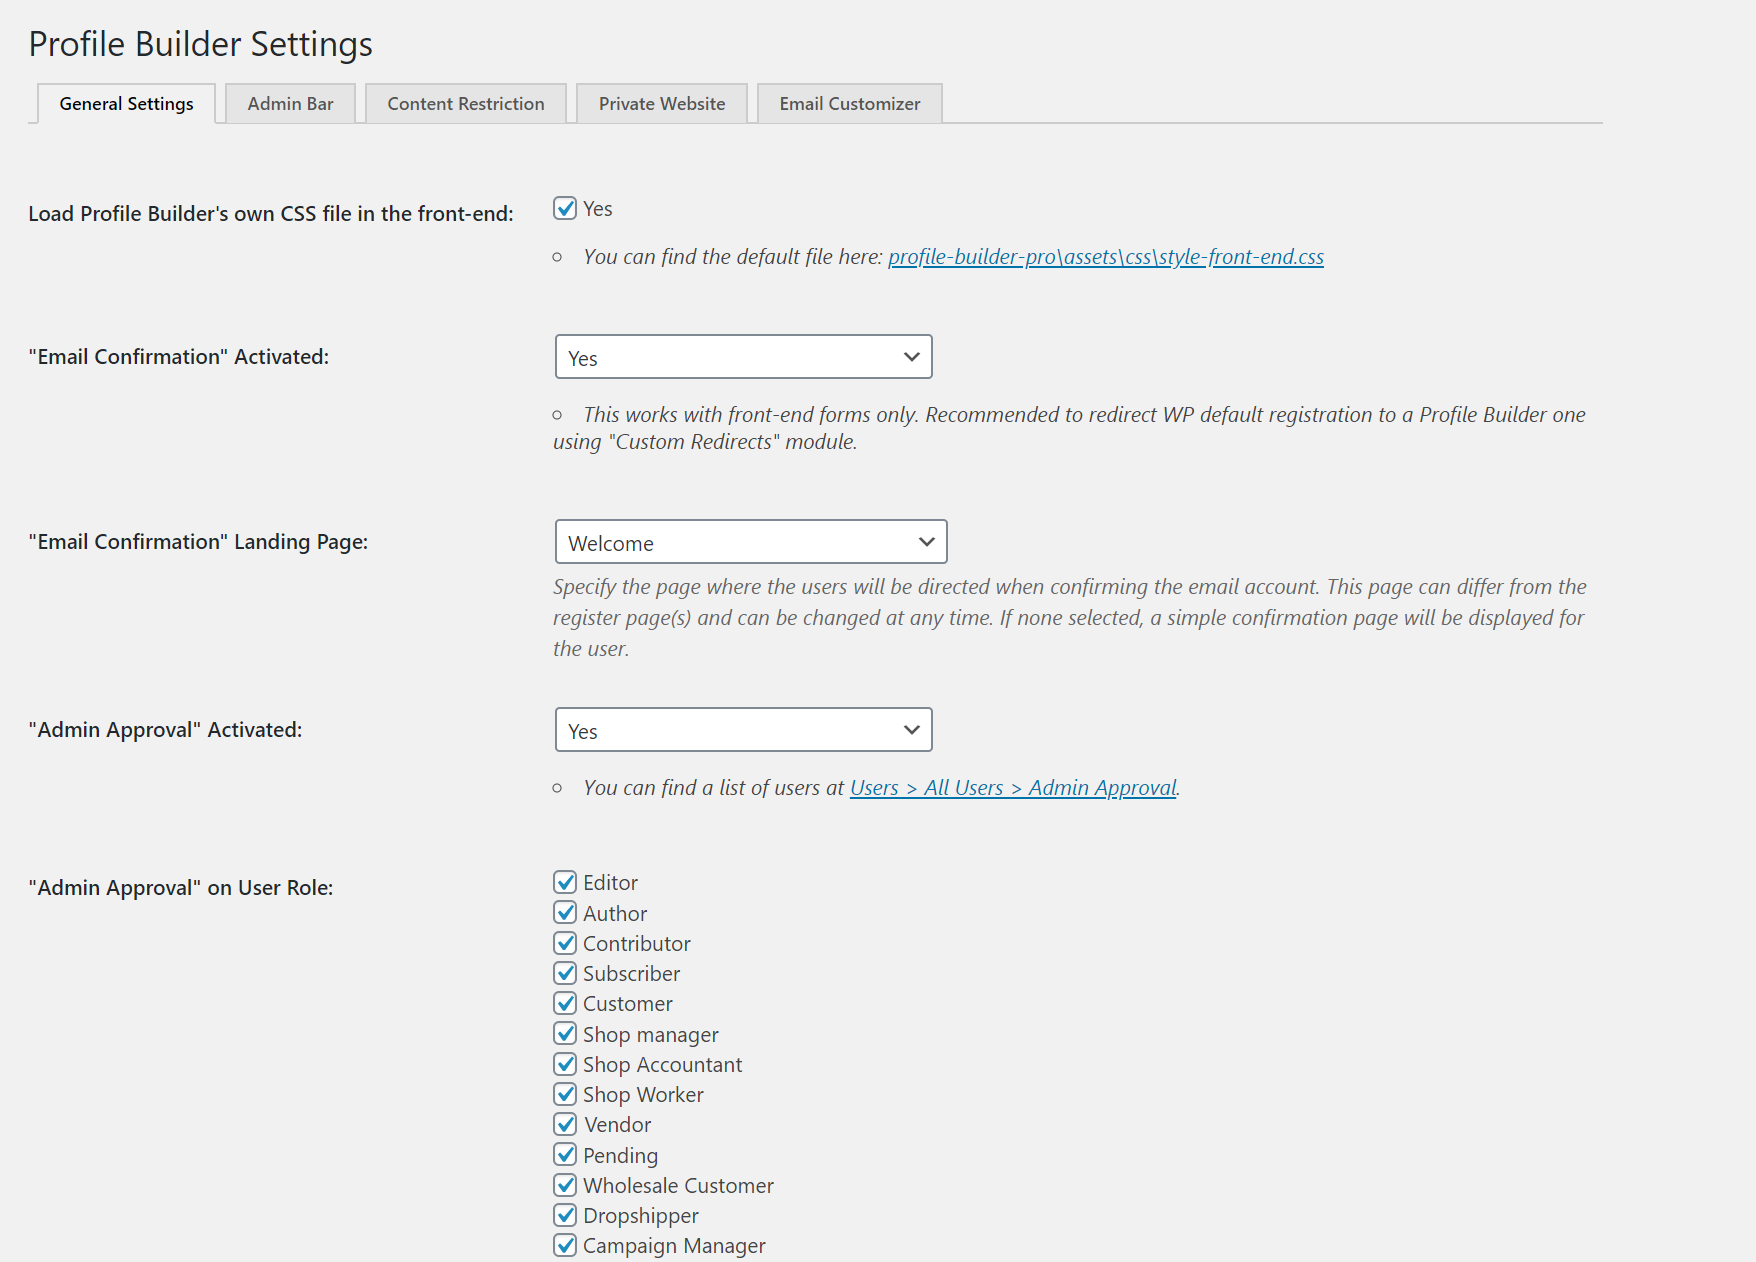 Profile Builder Pro settings screen